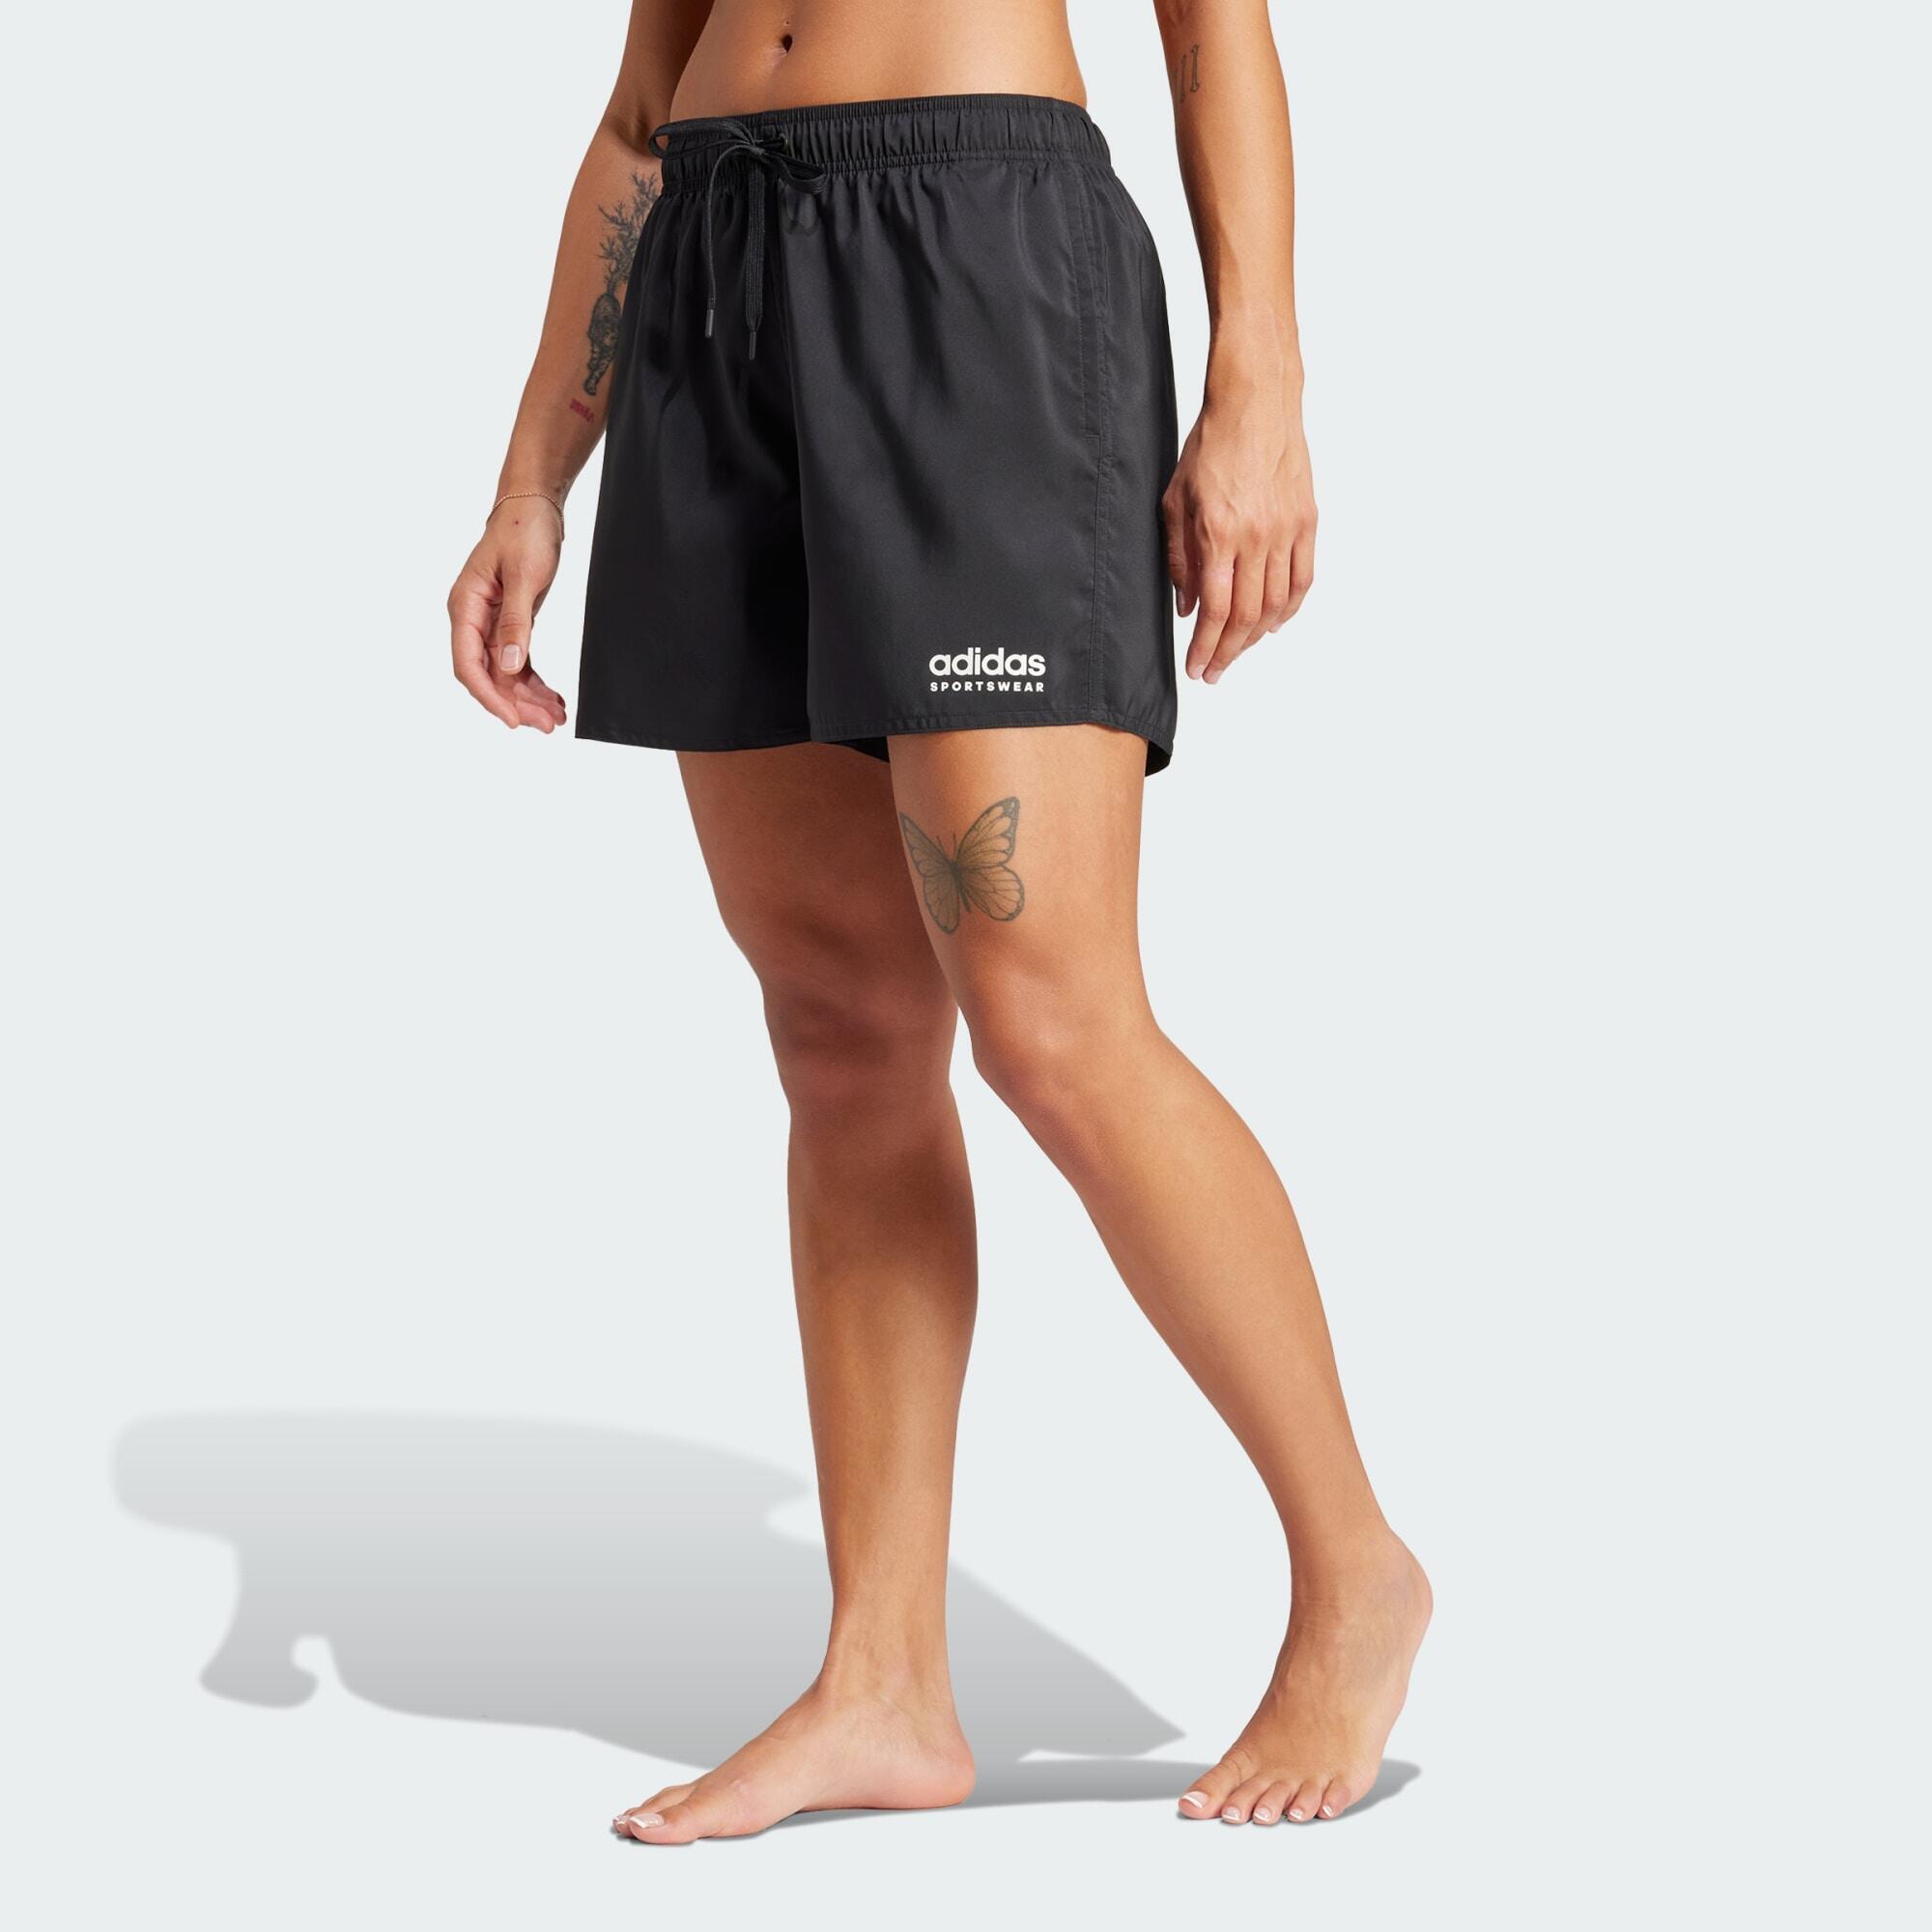 ADIDAS Branded Beach Shorts